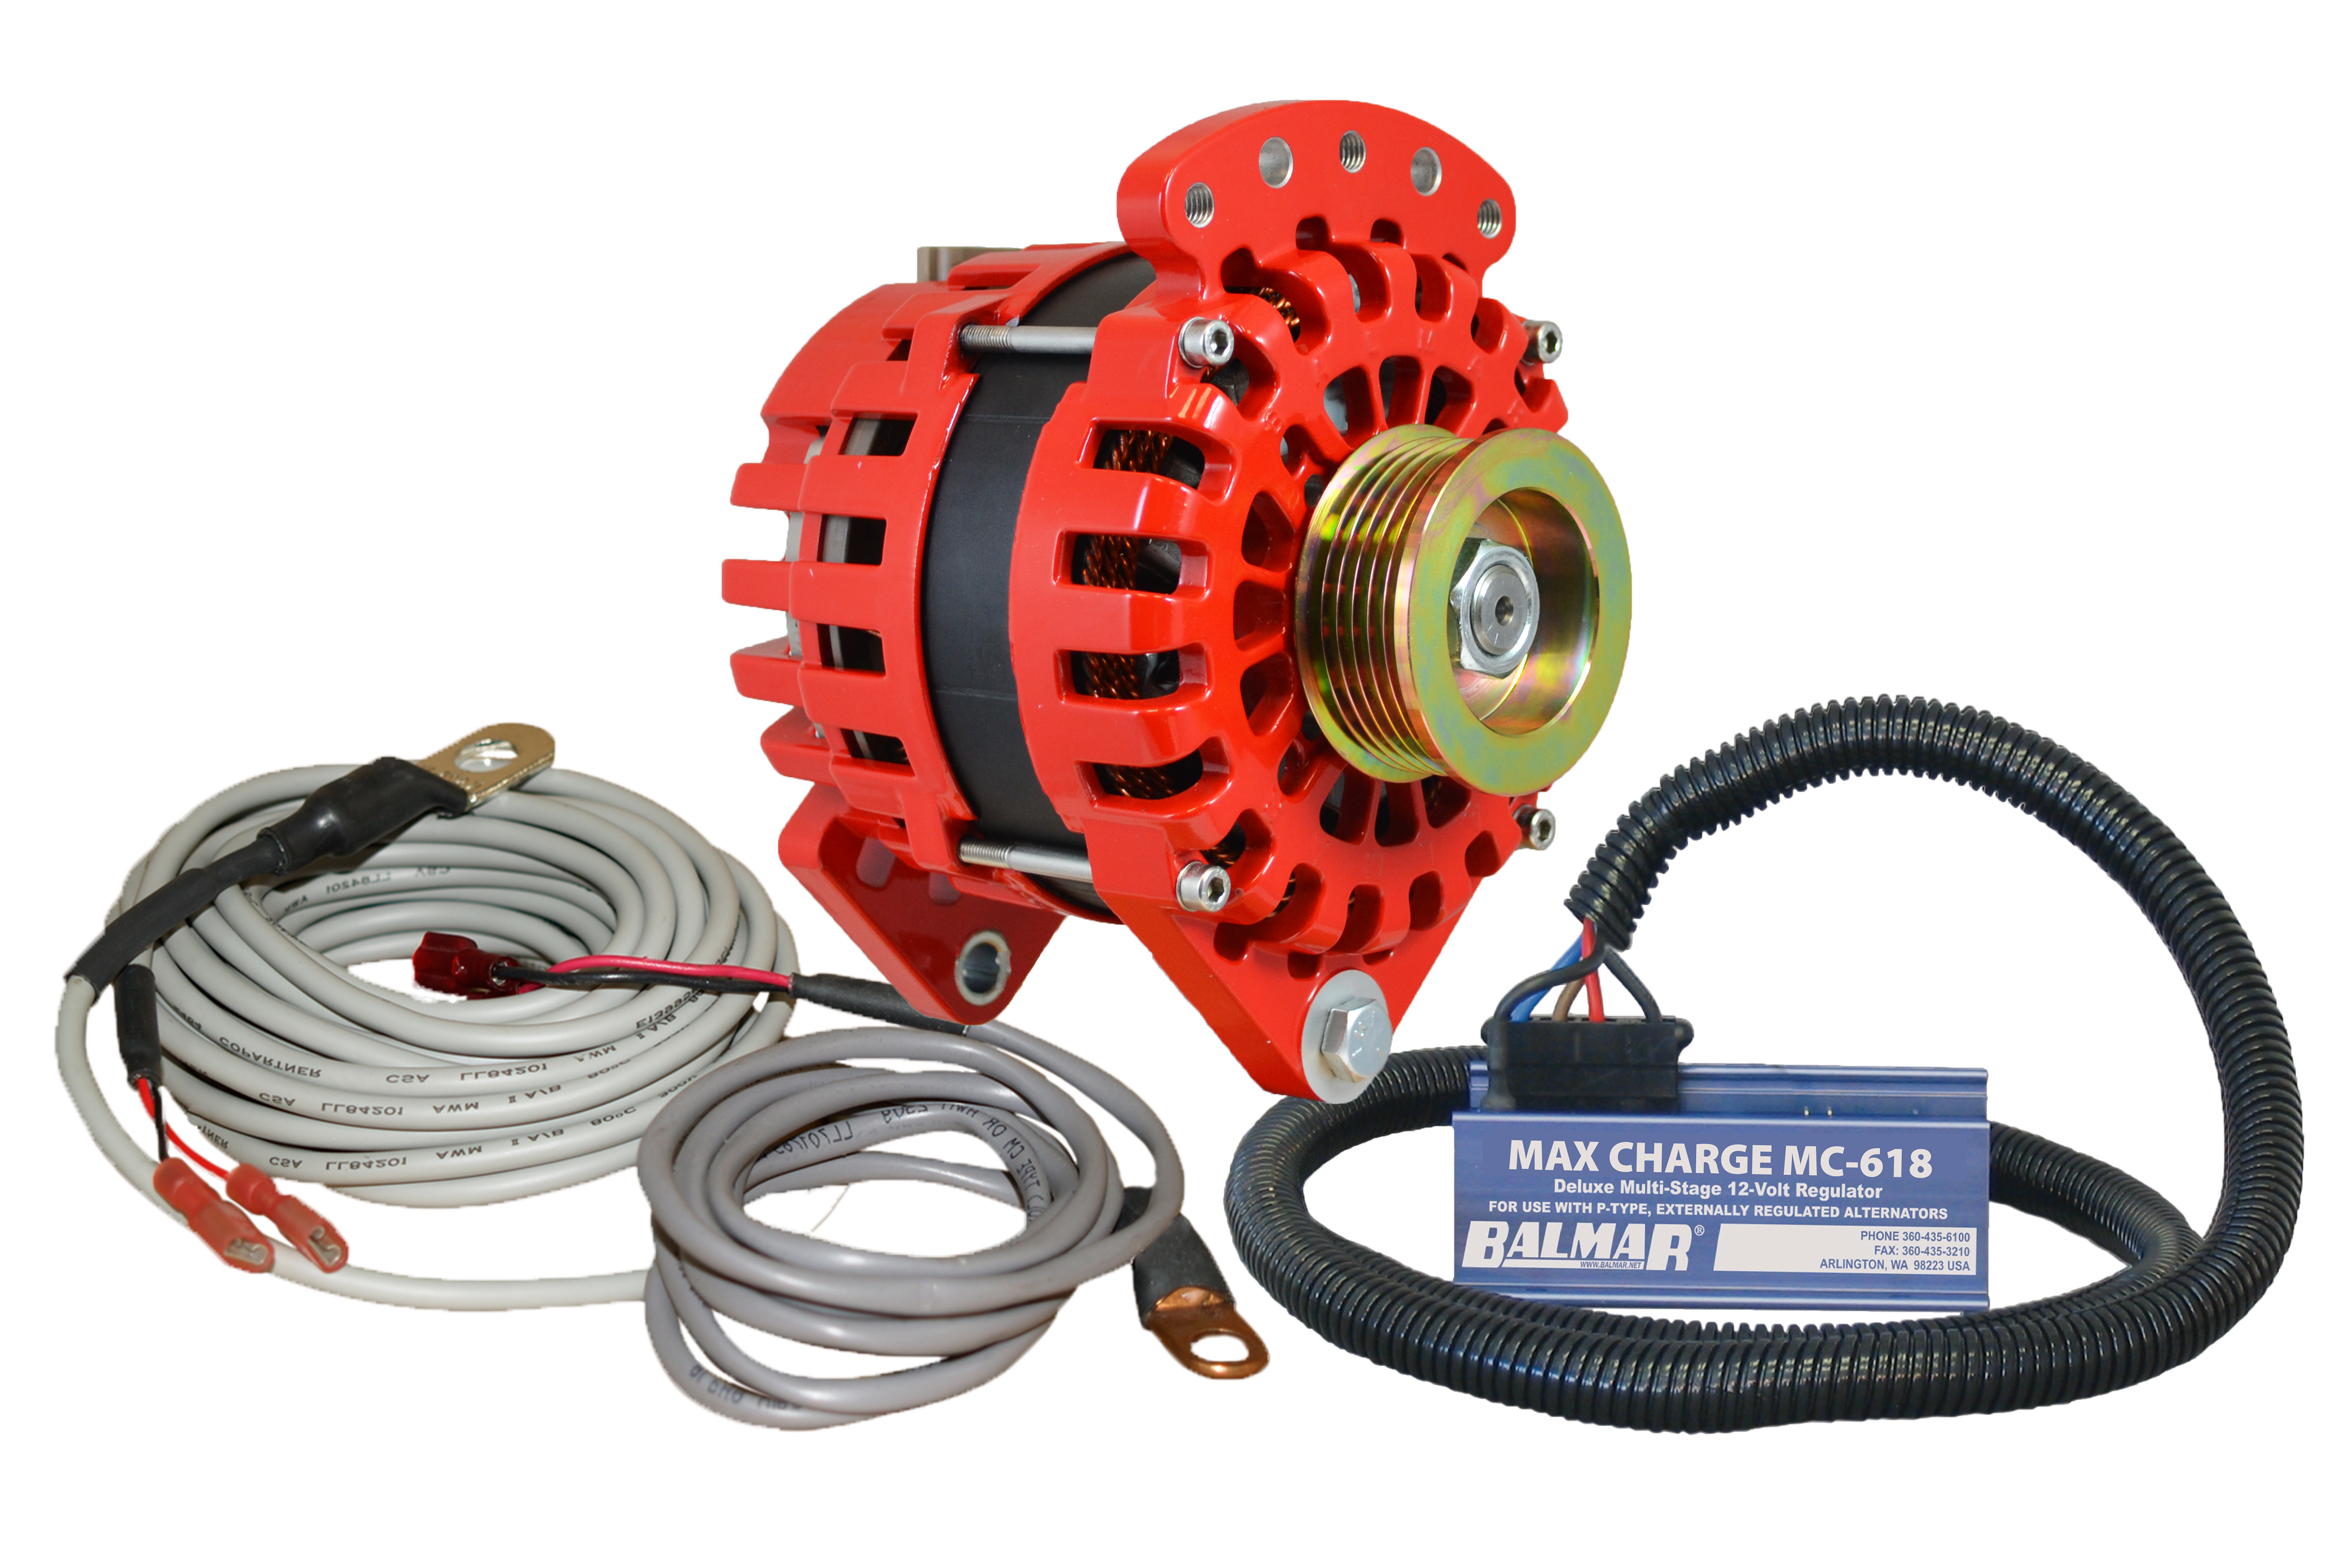 Balmar XT-DF-170-K6-3YM-KIT alternator kit with Max Charge regulator Questions & Answers